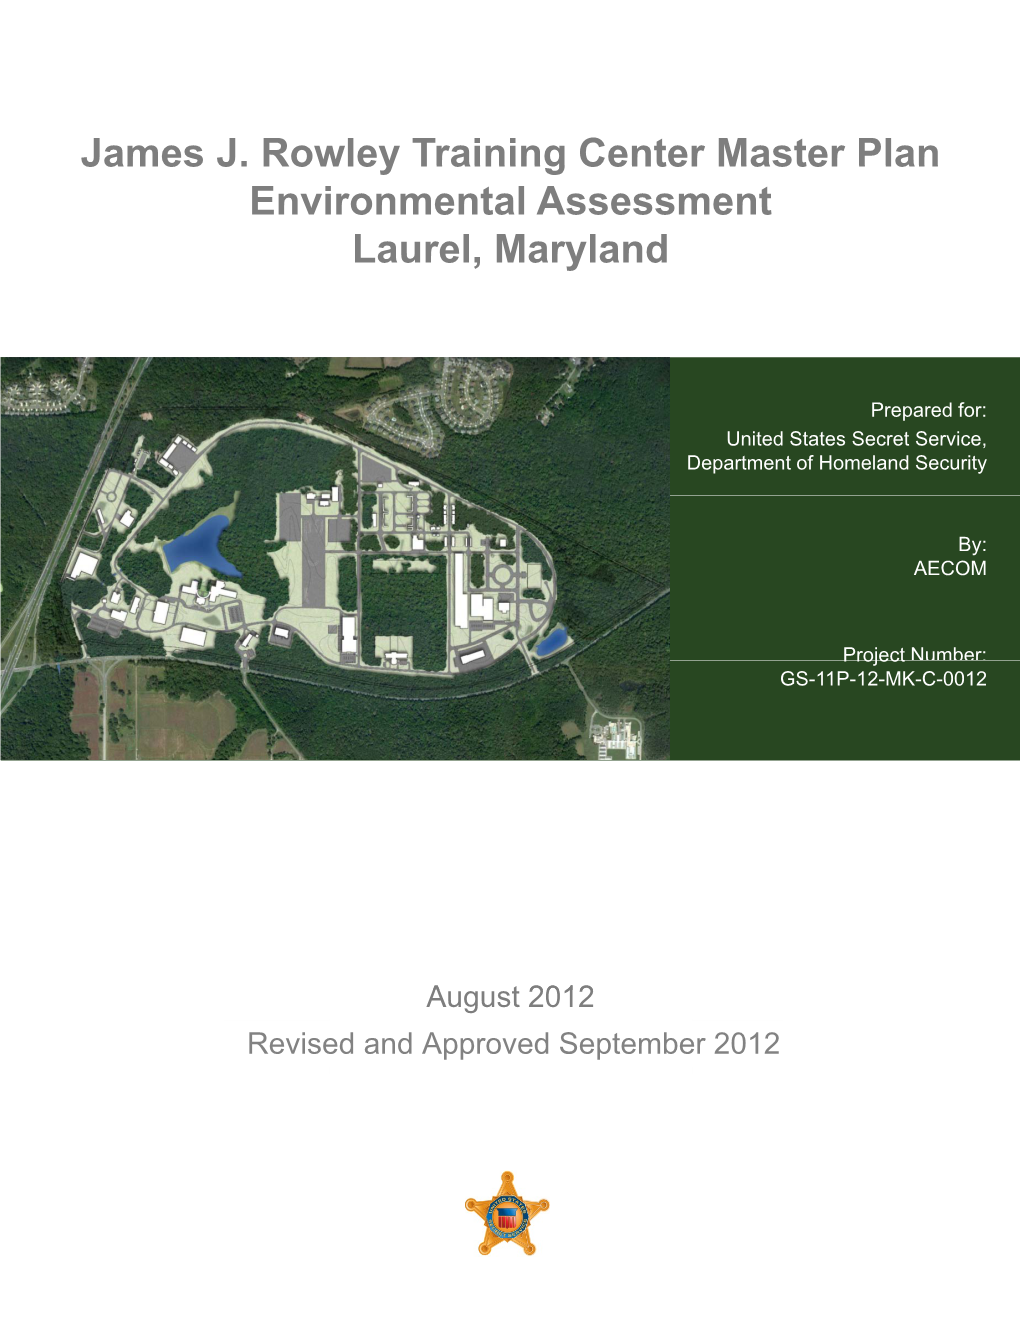 RTC Master Plan Final Environmental Assessment